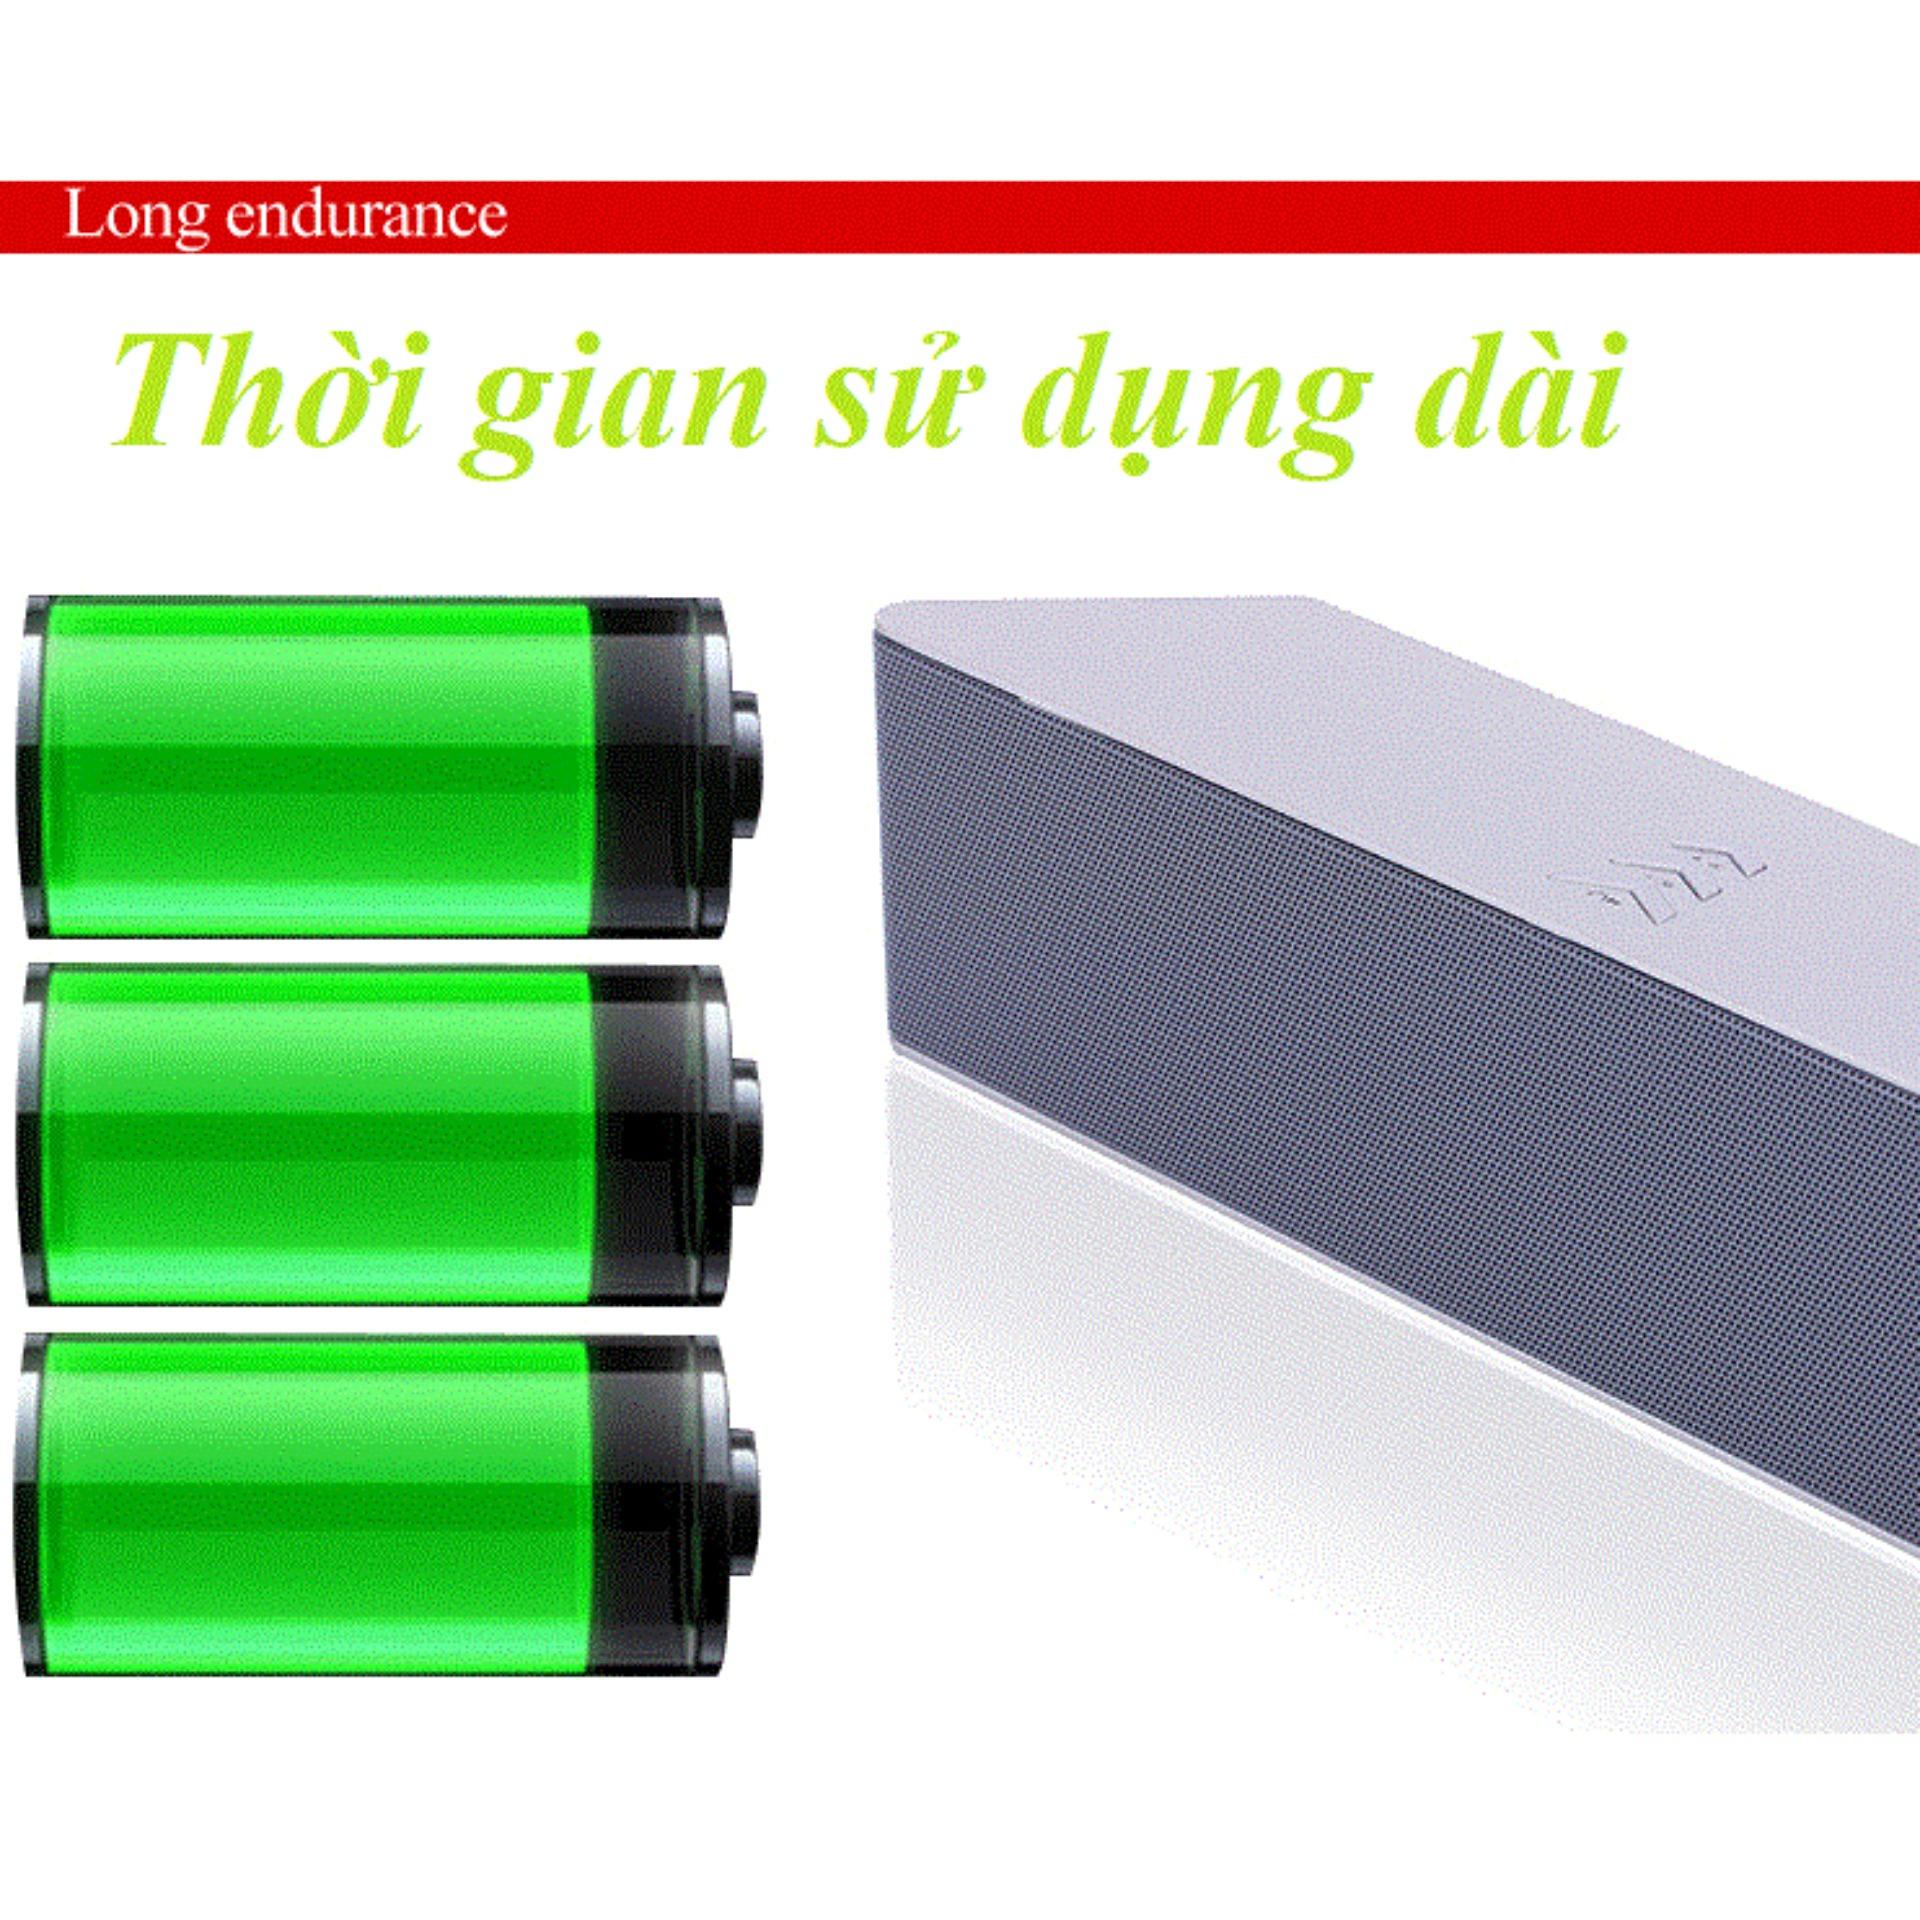 Ban Loa Sub Sieu Tram AHKL011, cua hang ban loa keo - Loa Bluetooth Di Động Bền Đẹp - Bảo...